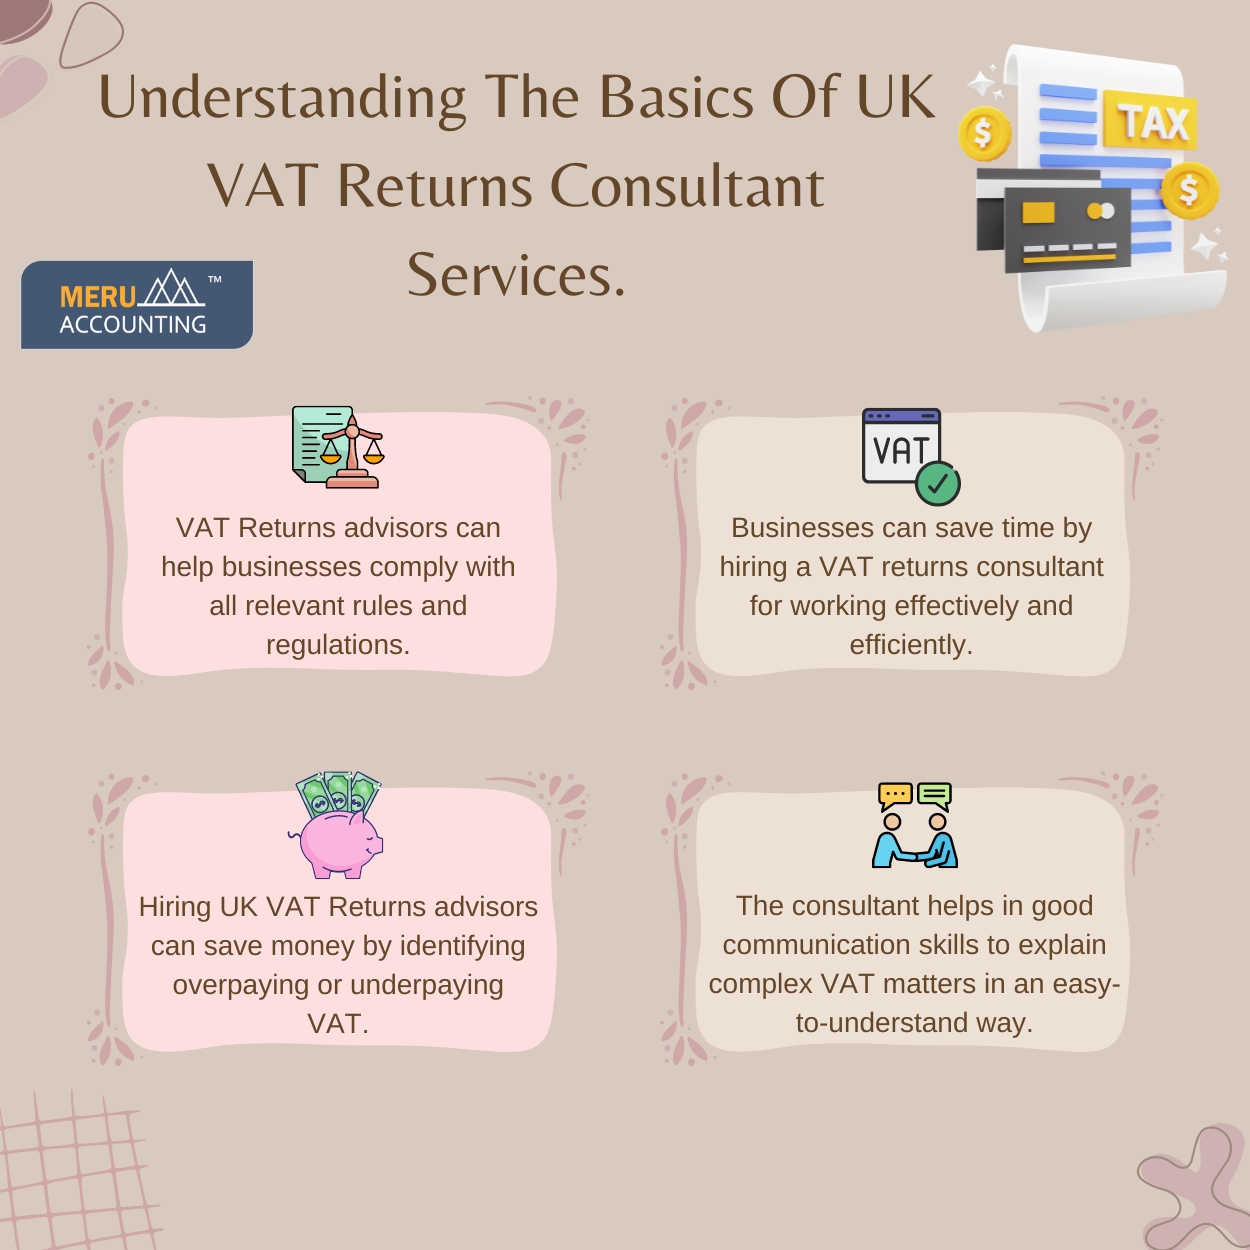 Understanding The Basics Of UK VAT Returns Consultant Services. size 1250 by 1250 v1